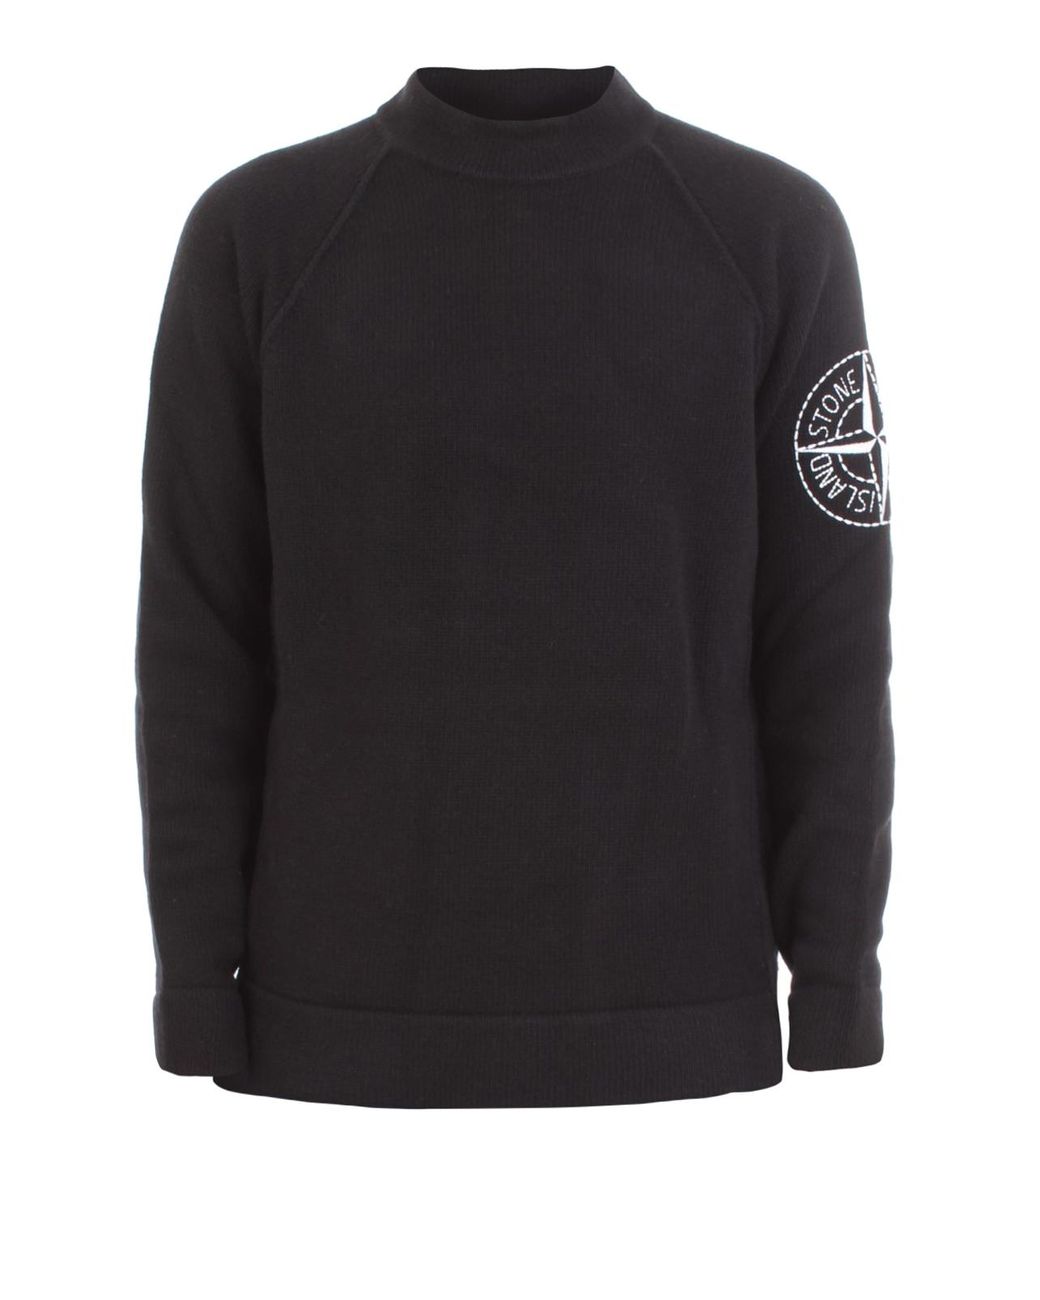 Stone Island Logo Embroidery Wool Mock Neck Sweater in Black for Men - Lyst